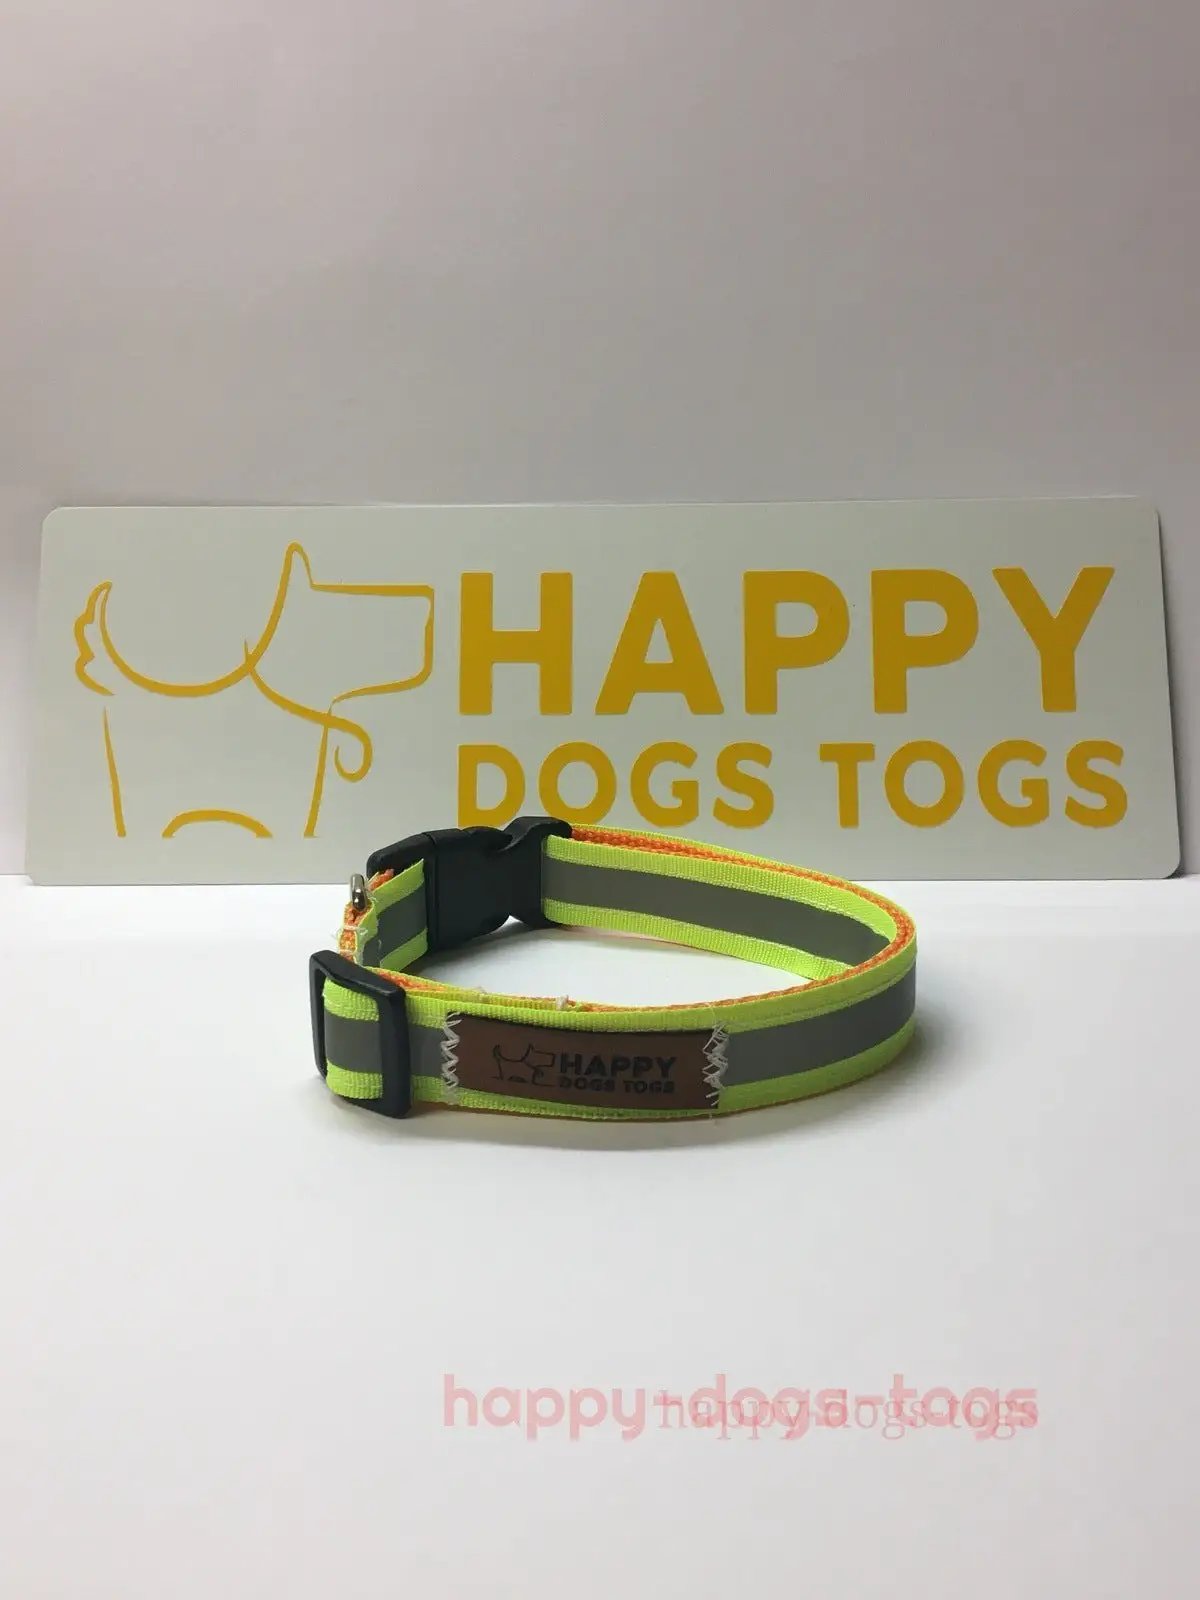 Medium size  Flourescent Yellow reflective safety dog collar  size